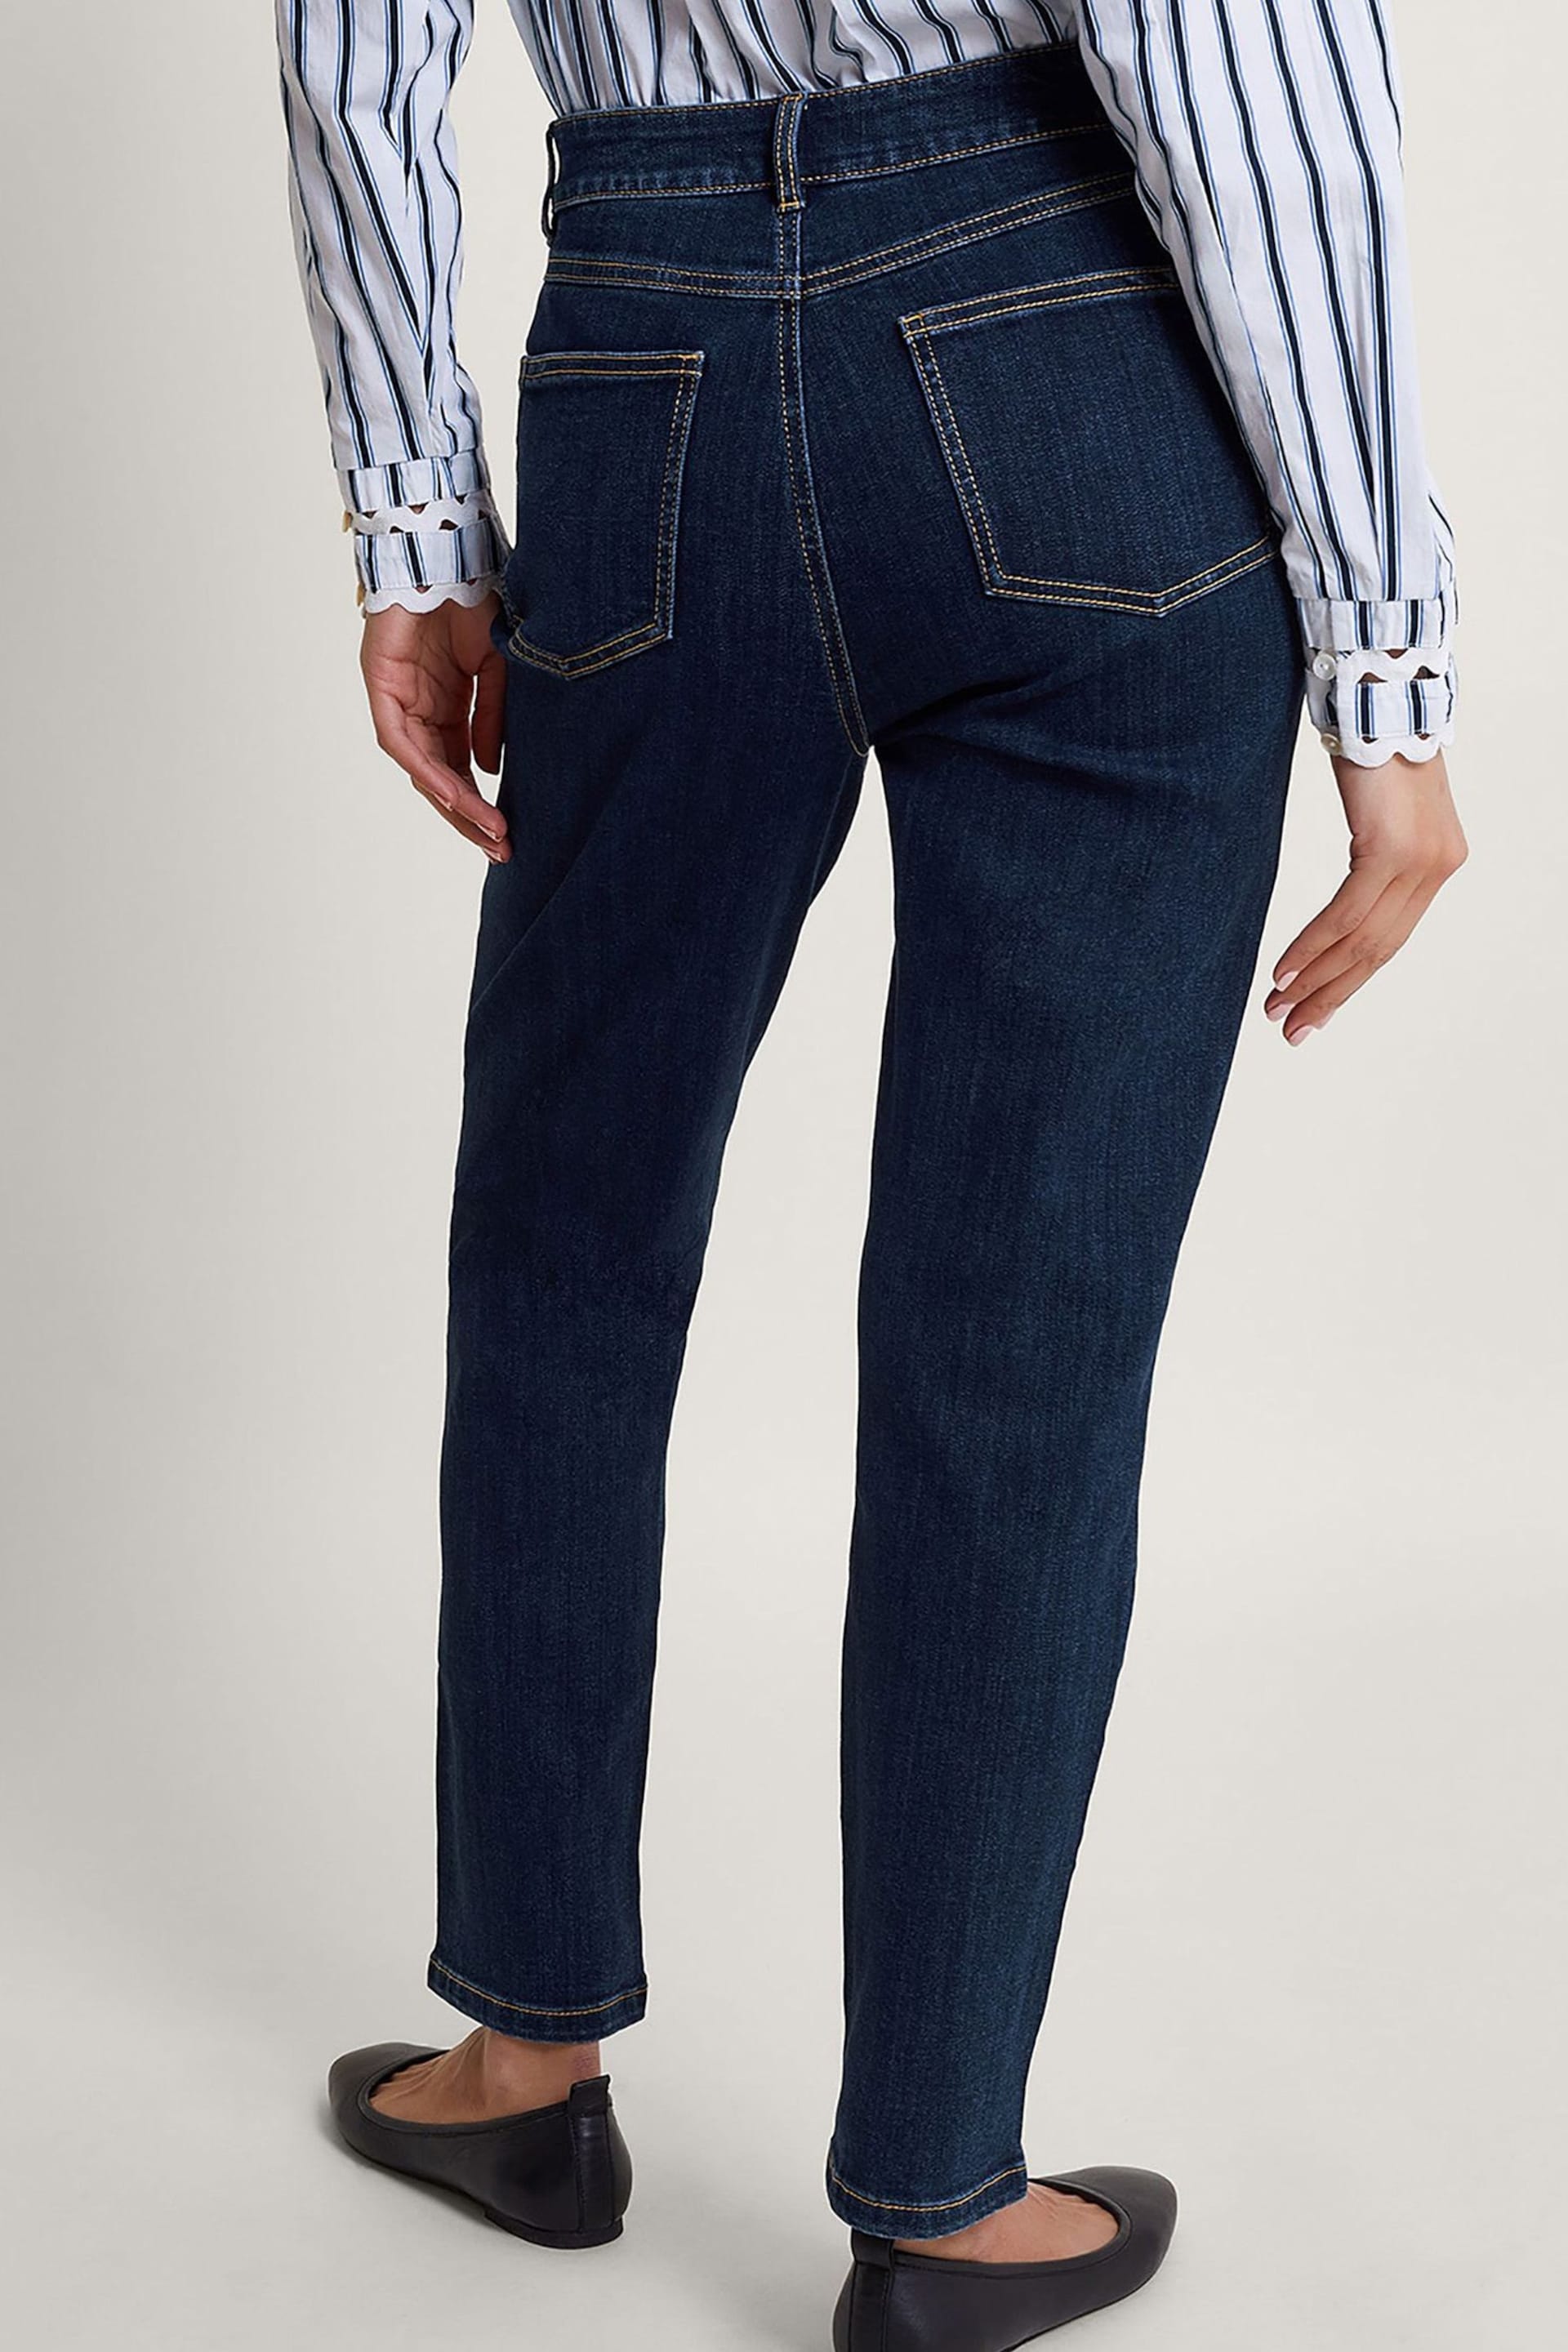 Monsoon Vera Slim Fit Jeans - Image 2 of 5